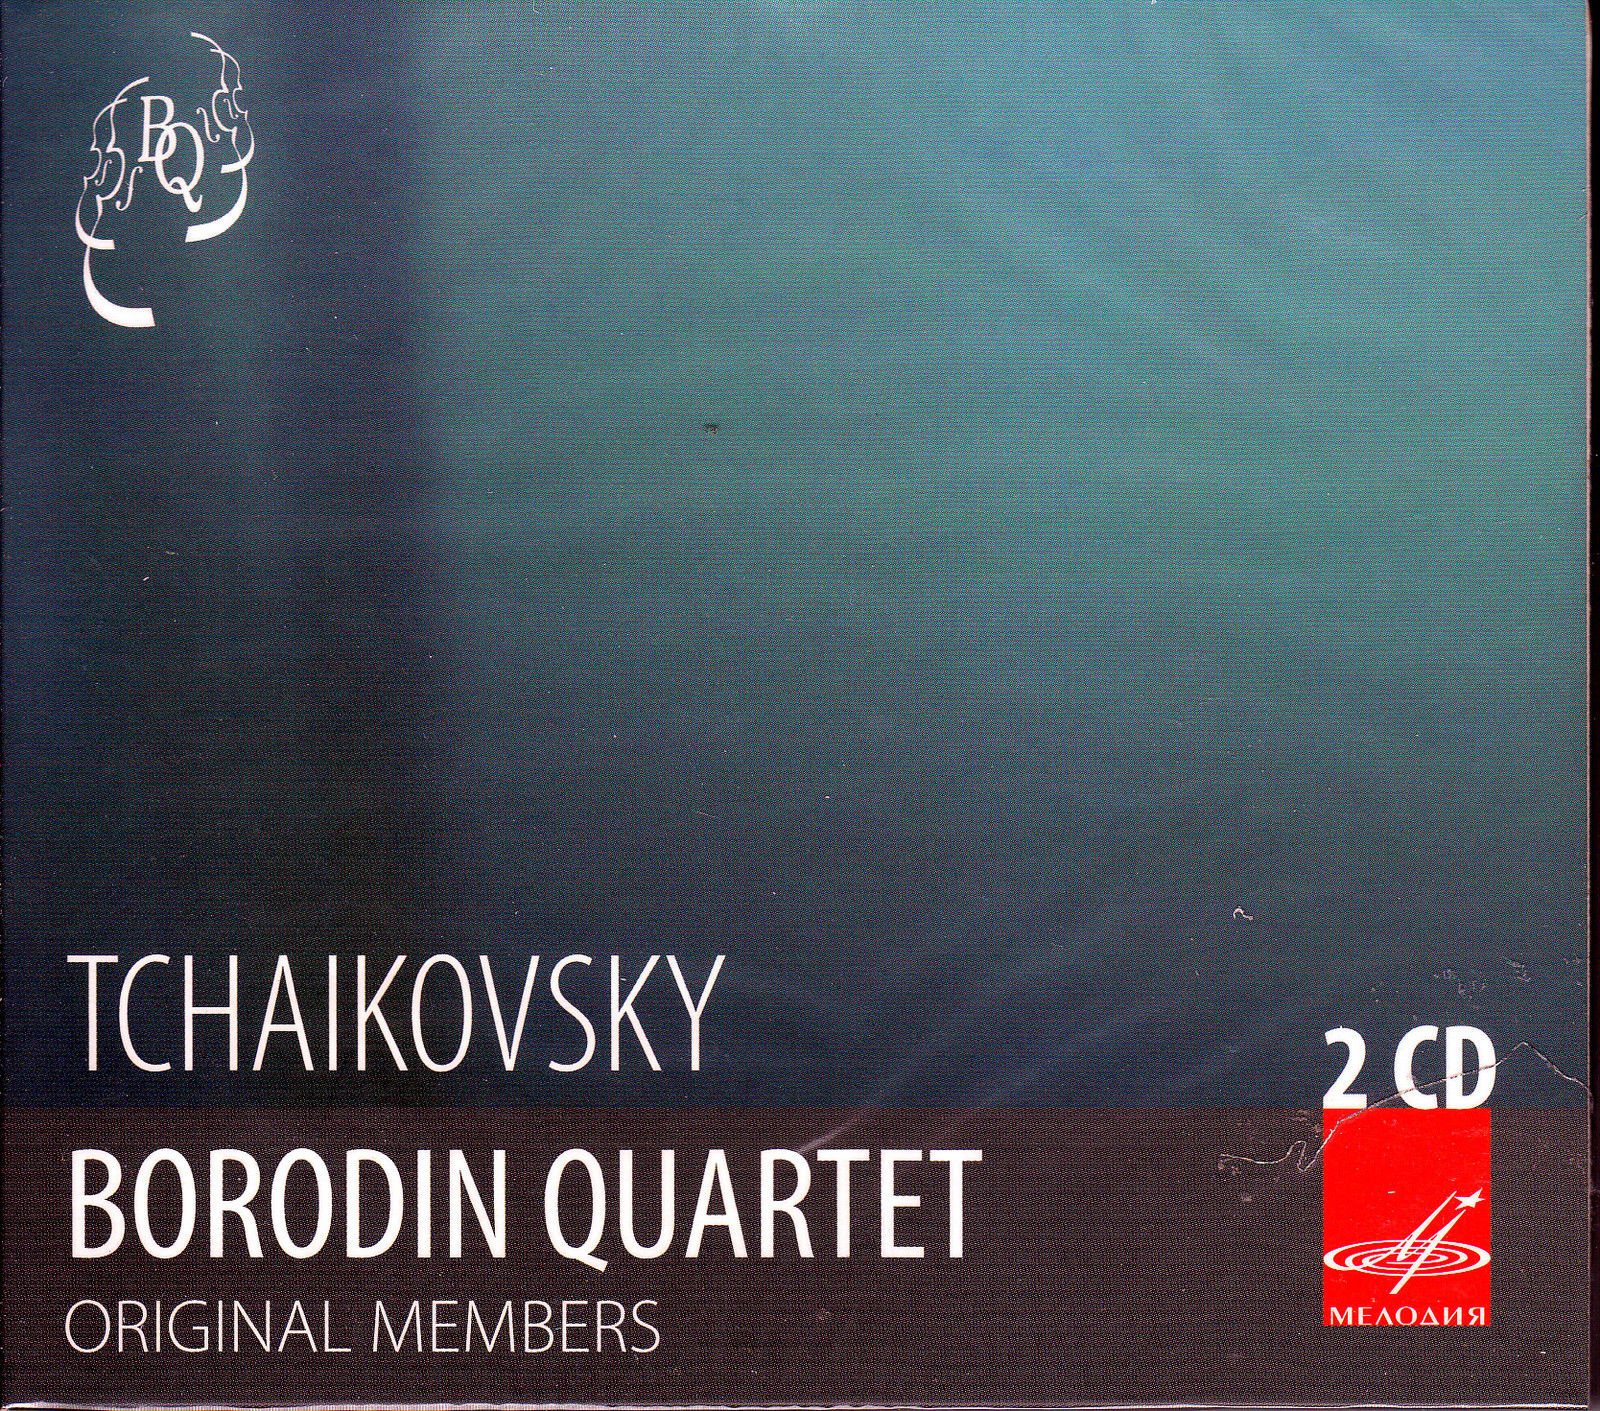 Borodin Quartet. Tchaikovsky. Original Members (2 CD)